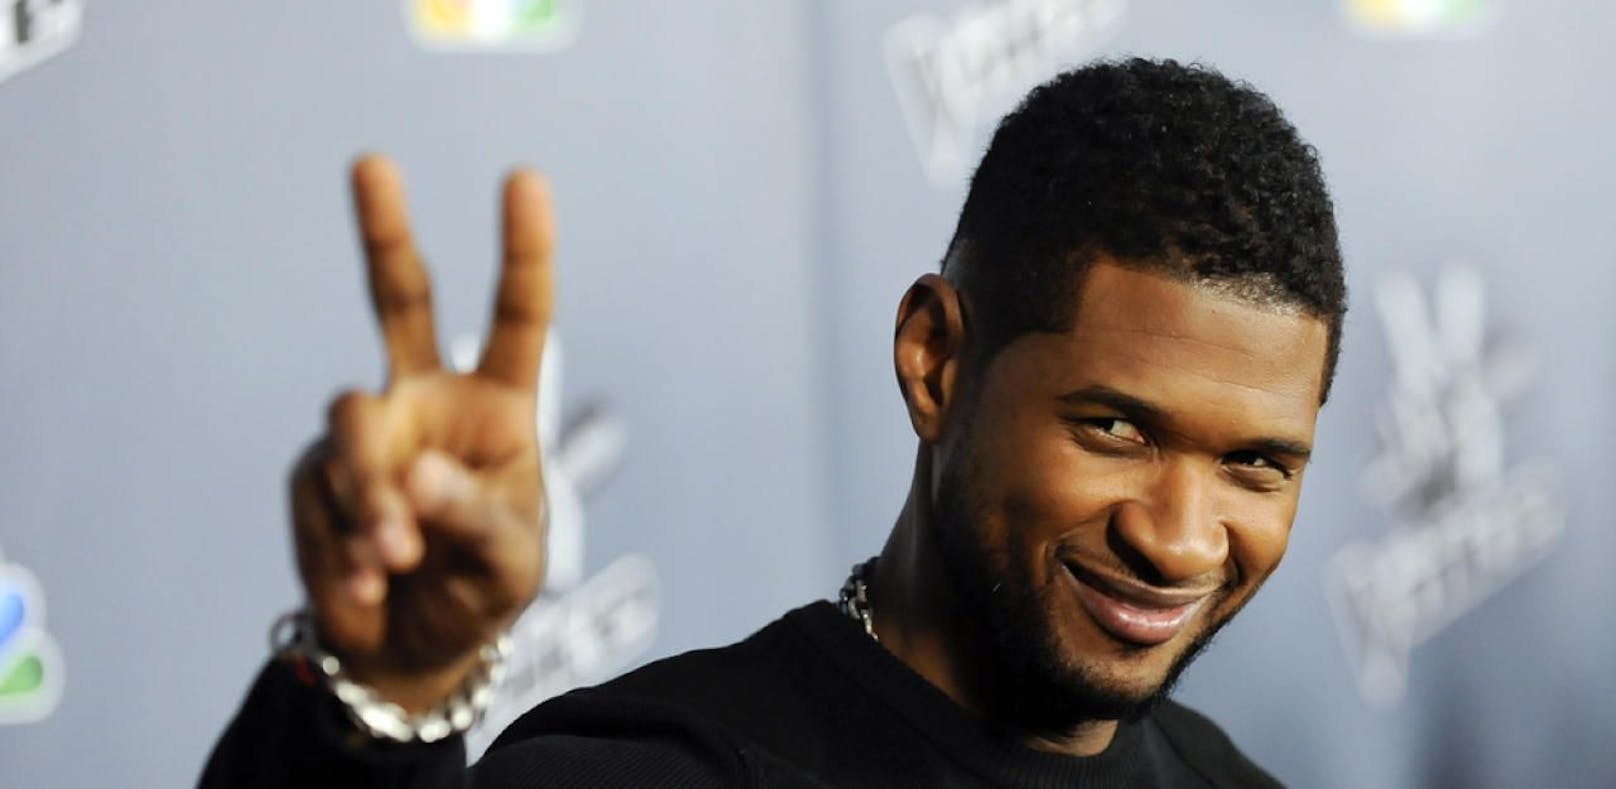 Zeugin belastet Usher in Genitalherpes-Fall